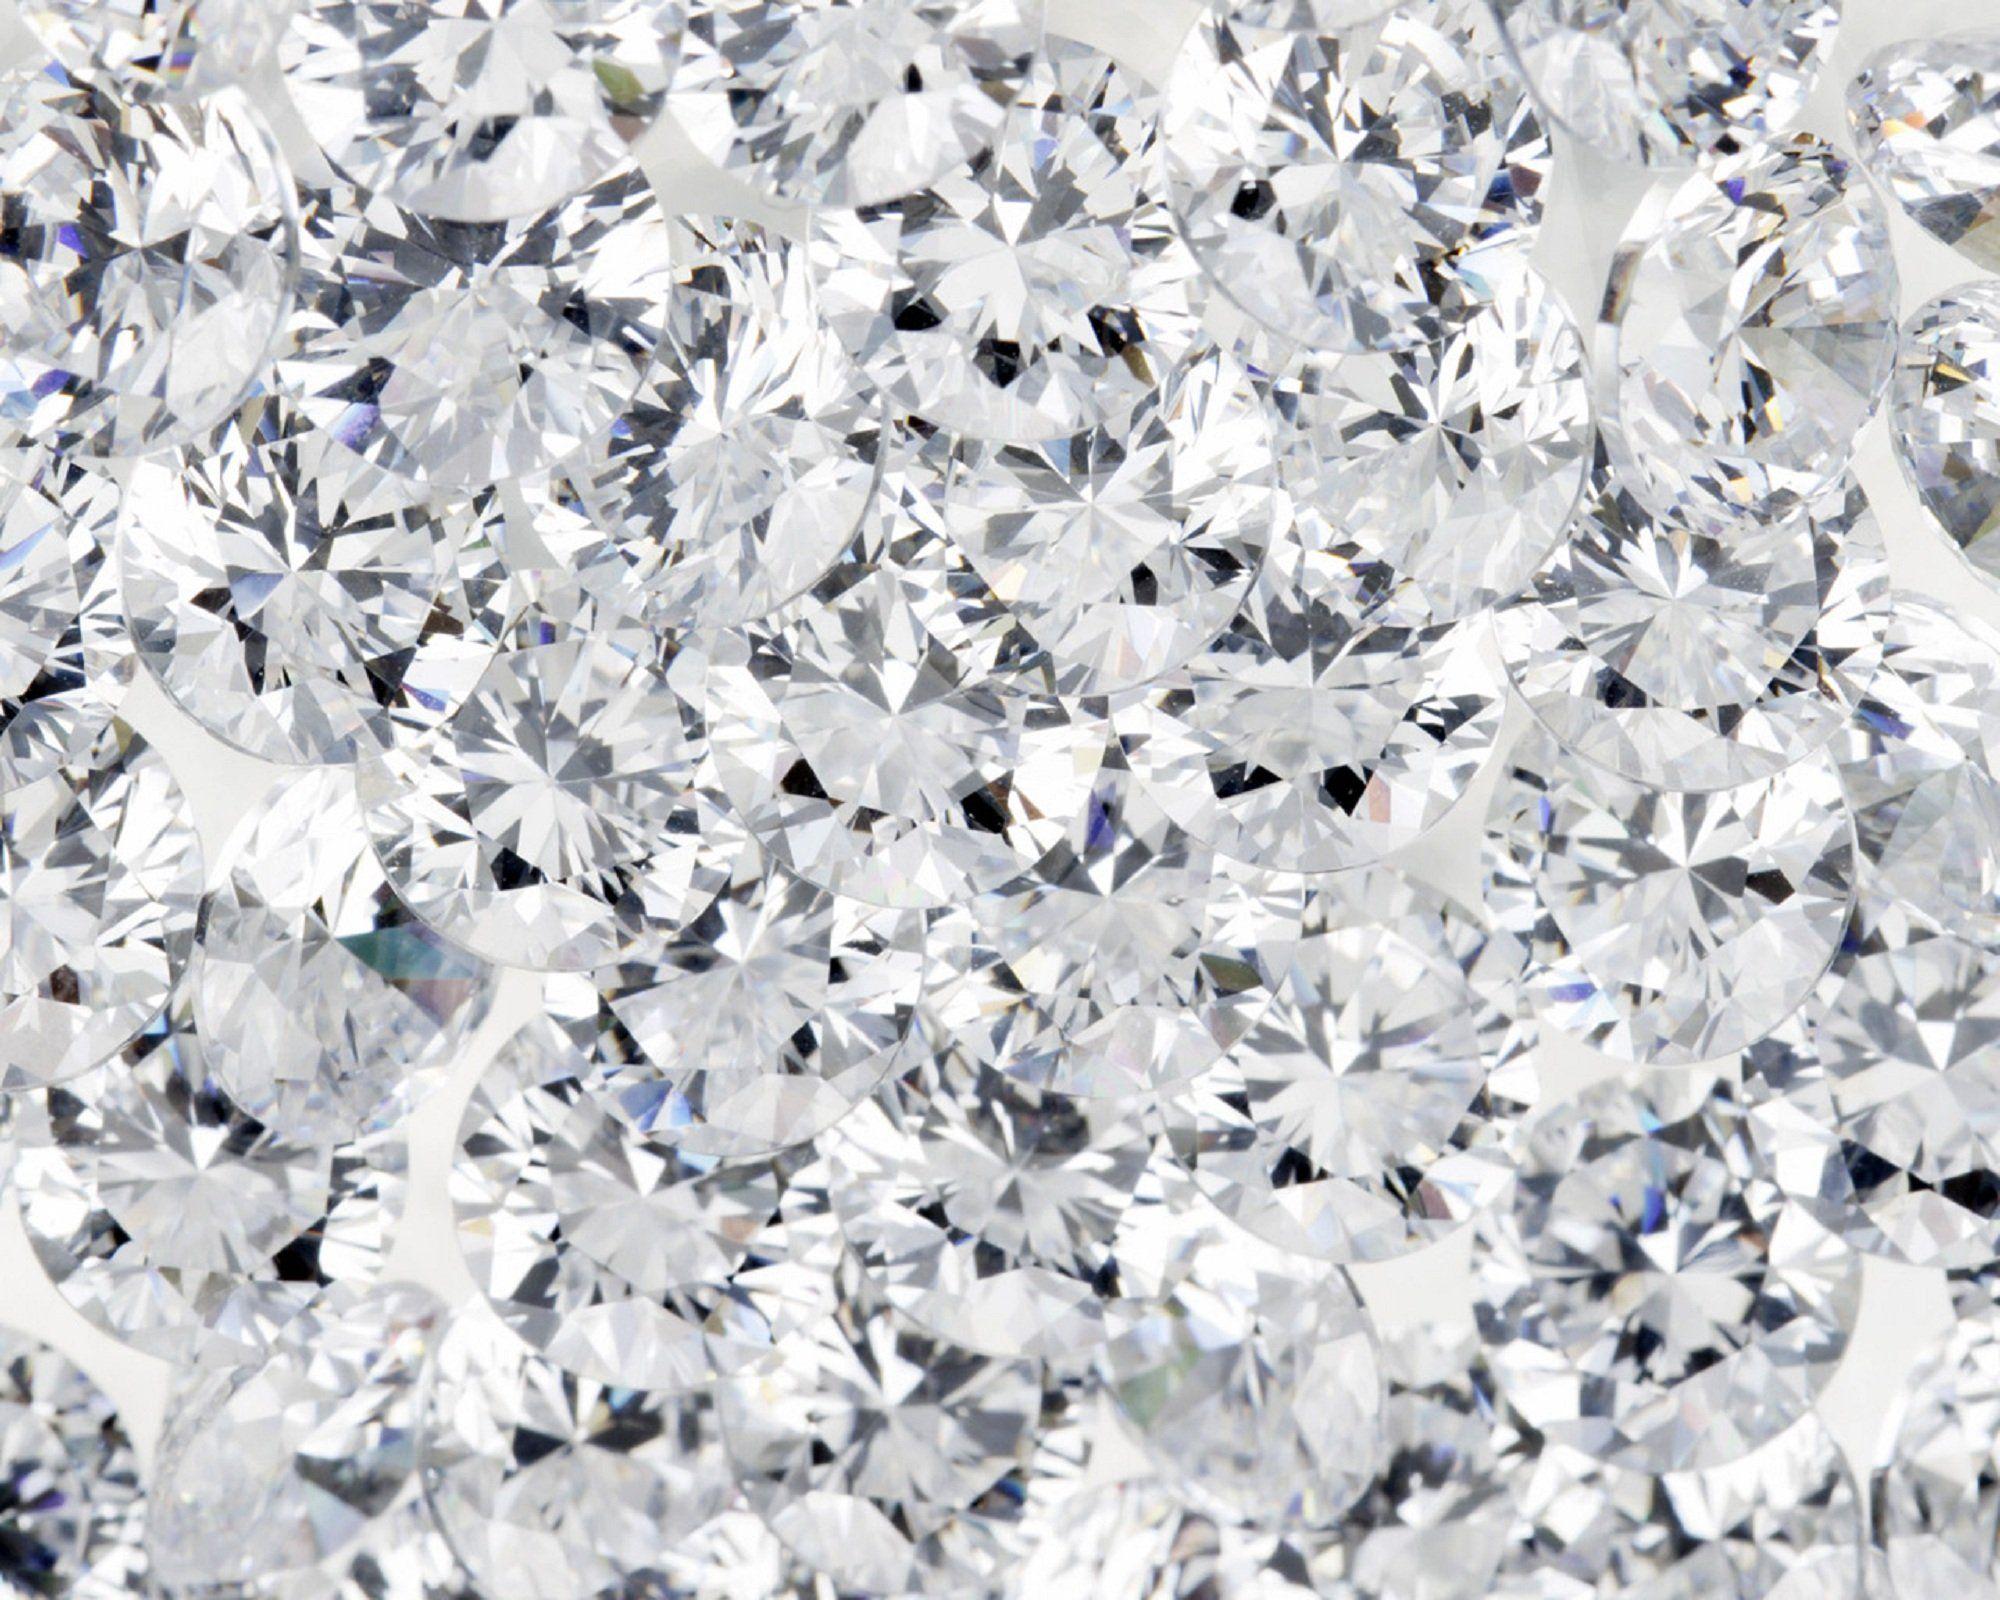 Crystal Diamond Light Background Wallpaper Stock Image  Image of festival  blue 205141549